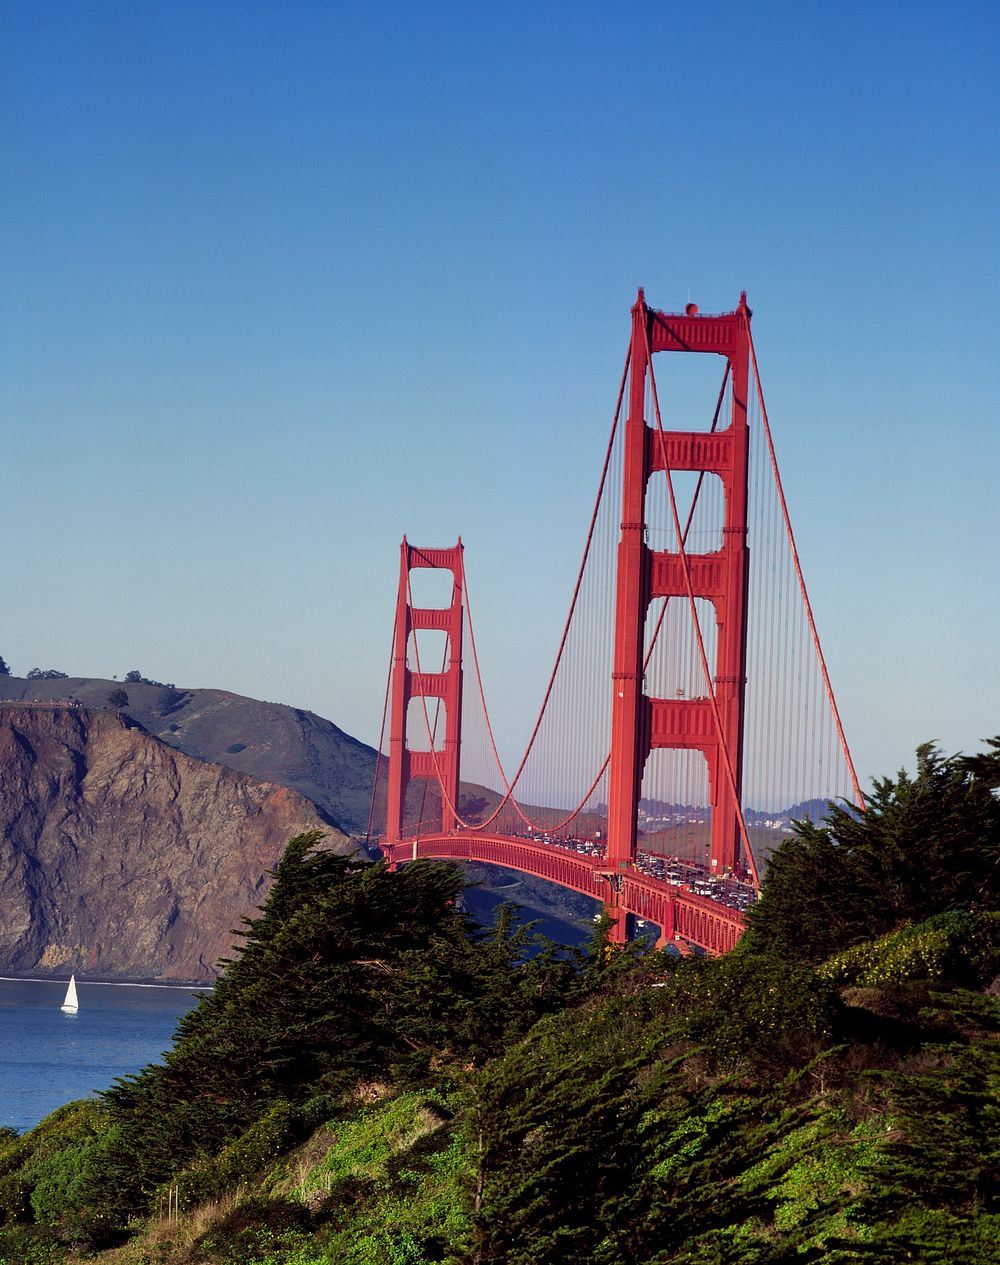 Golden gate bridge, San Fransisco USA - Original image from Carol M. Highsmith&rsquo;s America, Library of Congress…